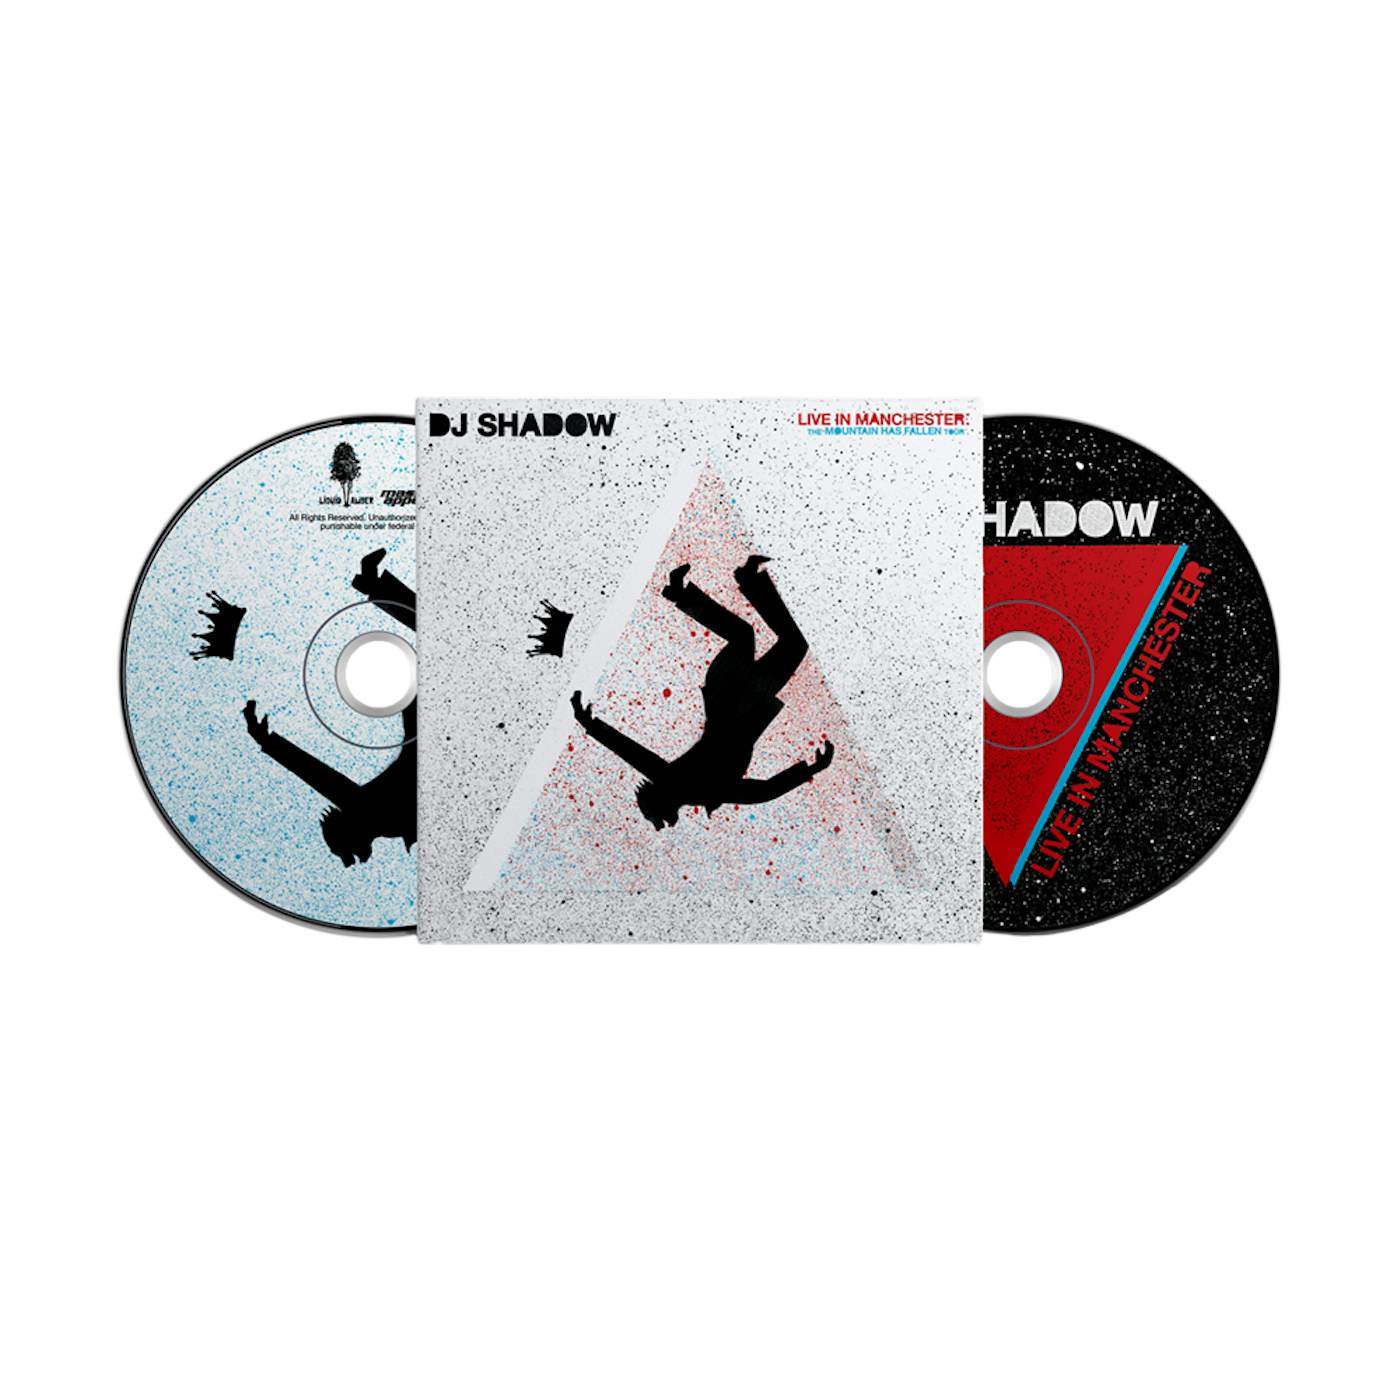 DJ Shadow Live In Manchester: The Mountain Has Fallen Tour CD/DVD